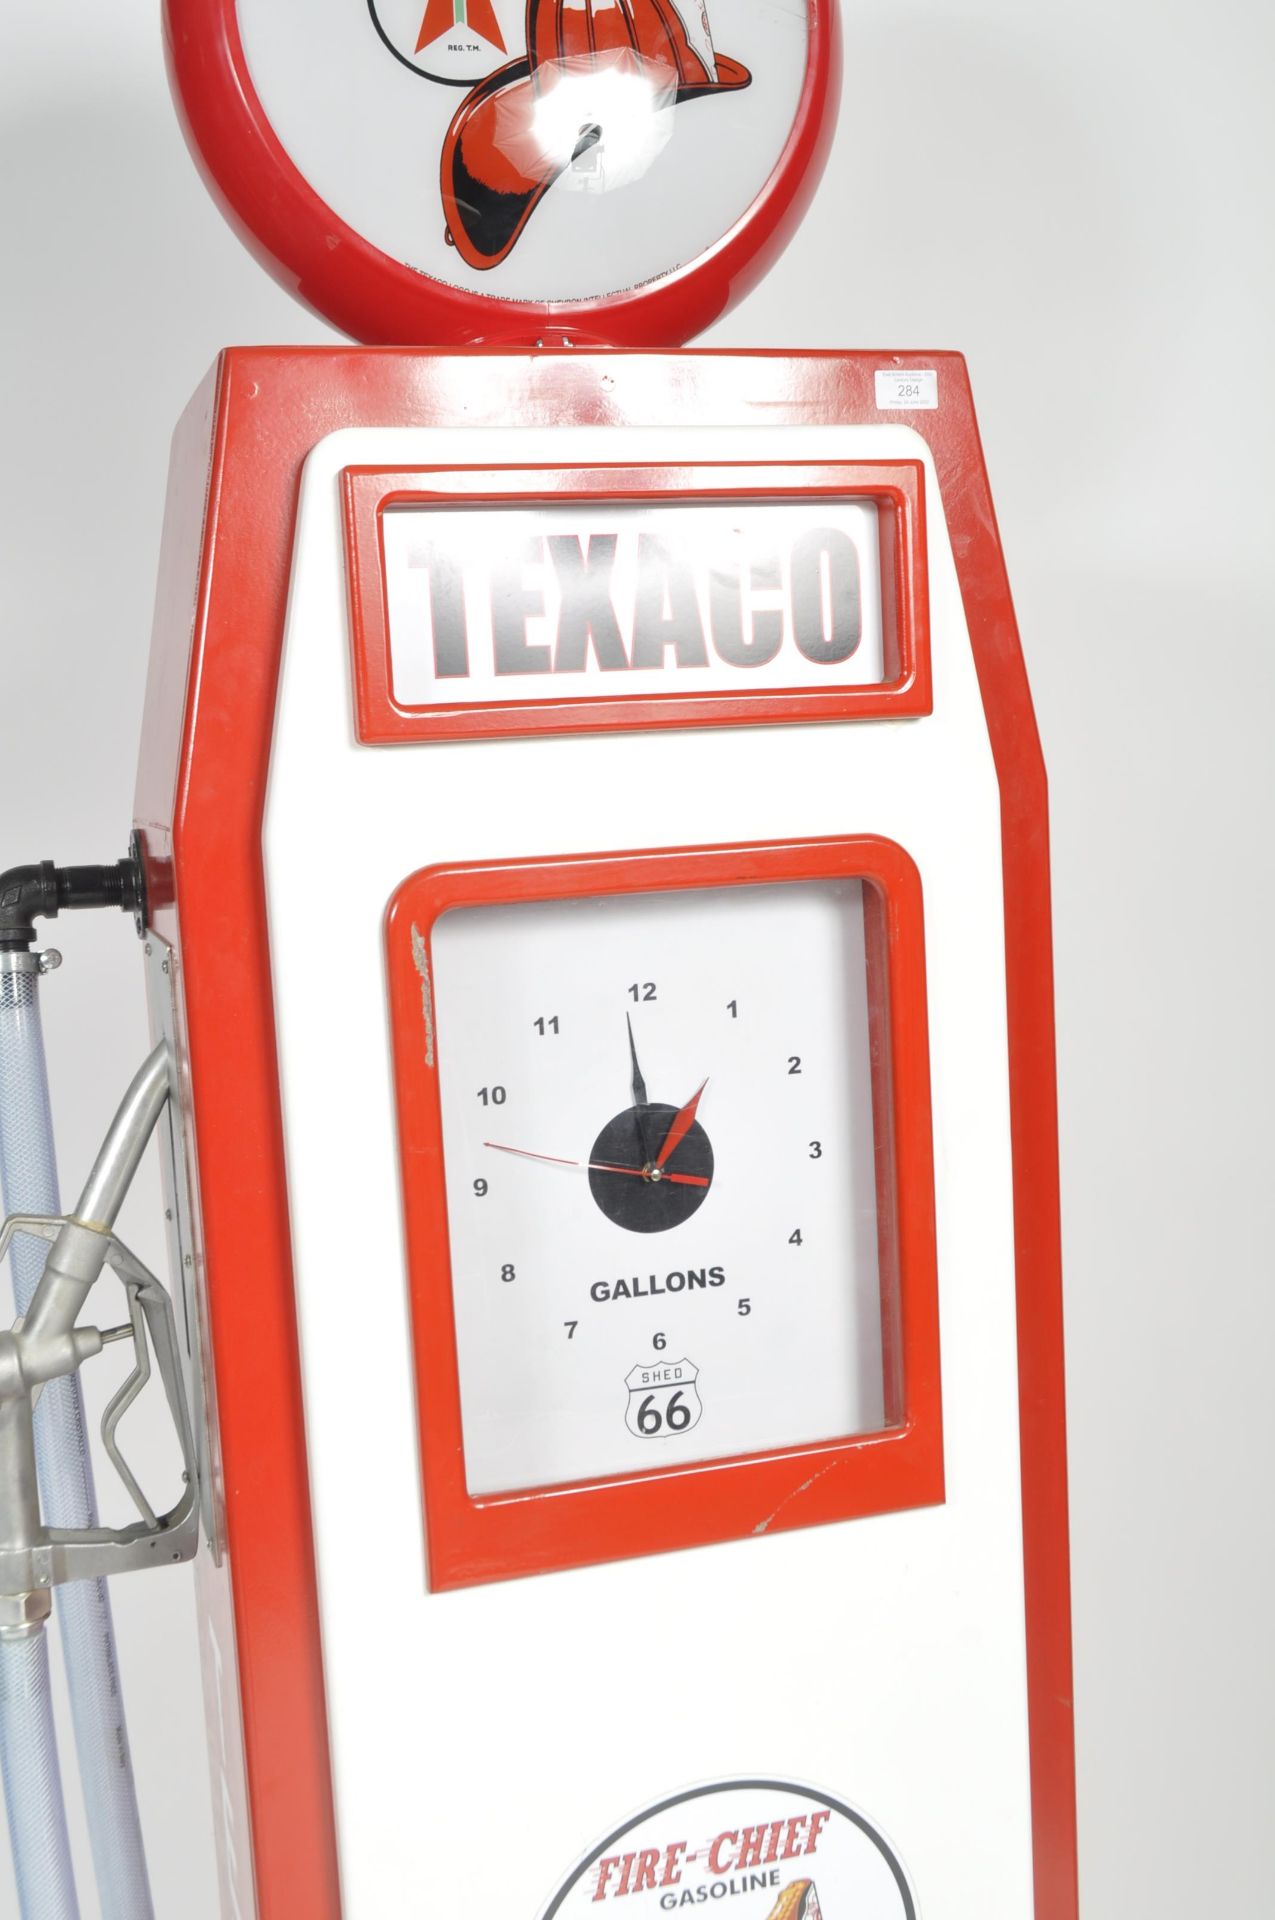 TEXACO FIRE CHIEF GASOLINE PETROL PUMP LIGHT - Image 2 of 10